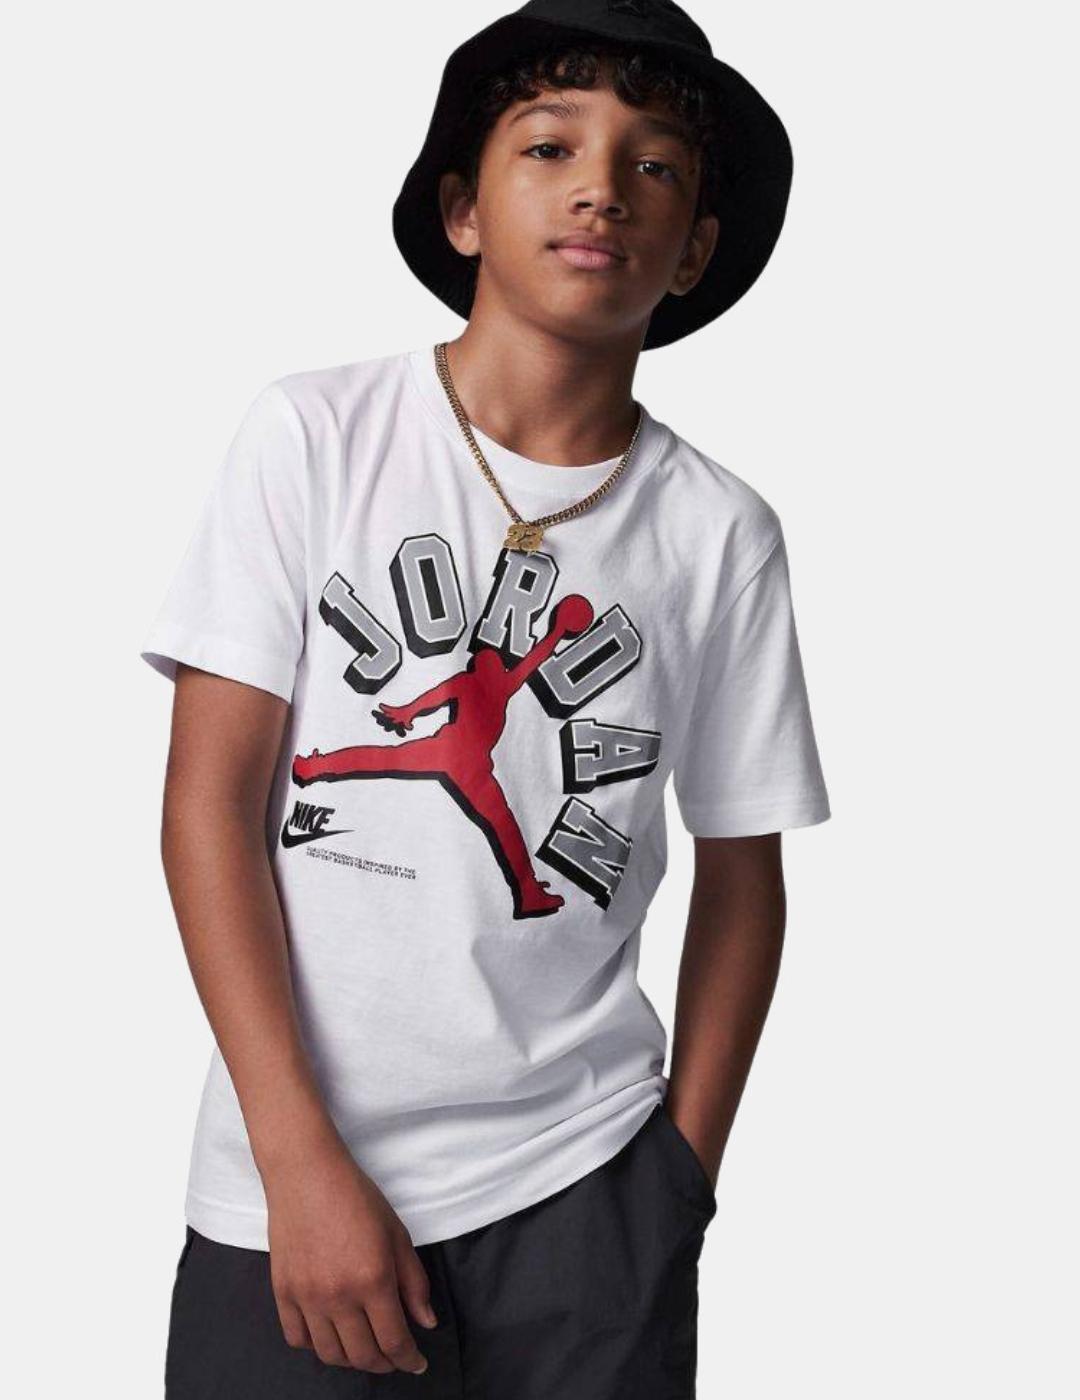 Jordan Camiseta - Niño/a